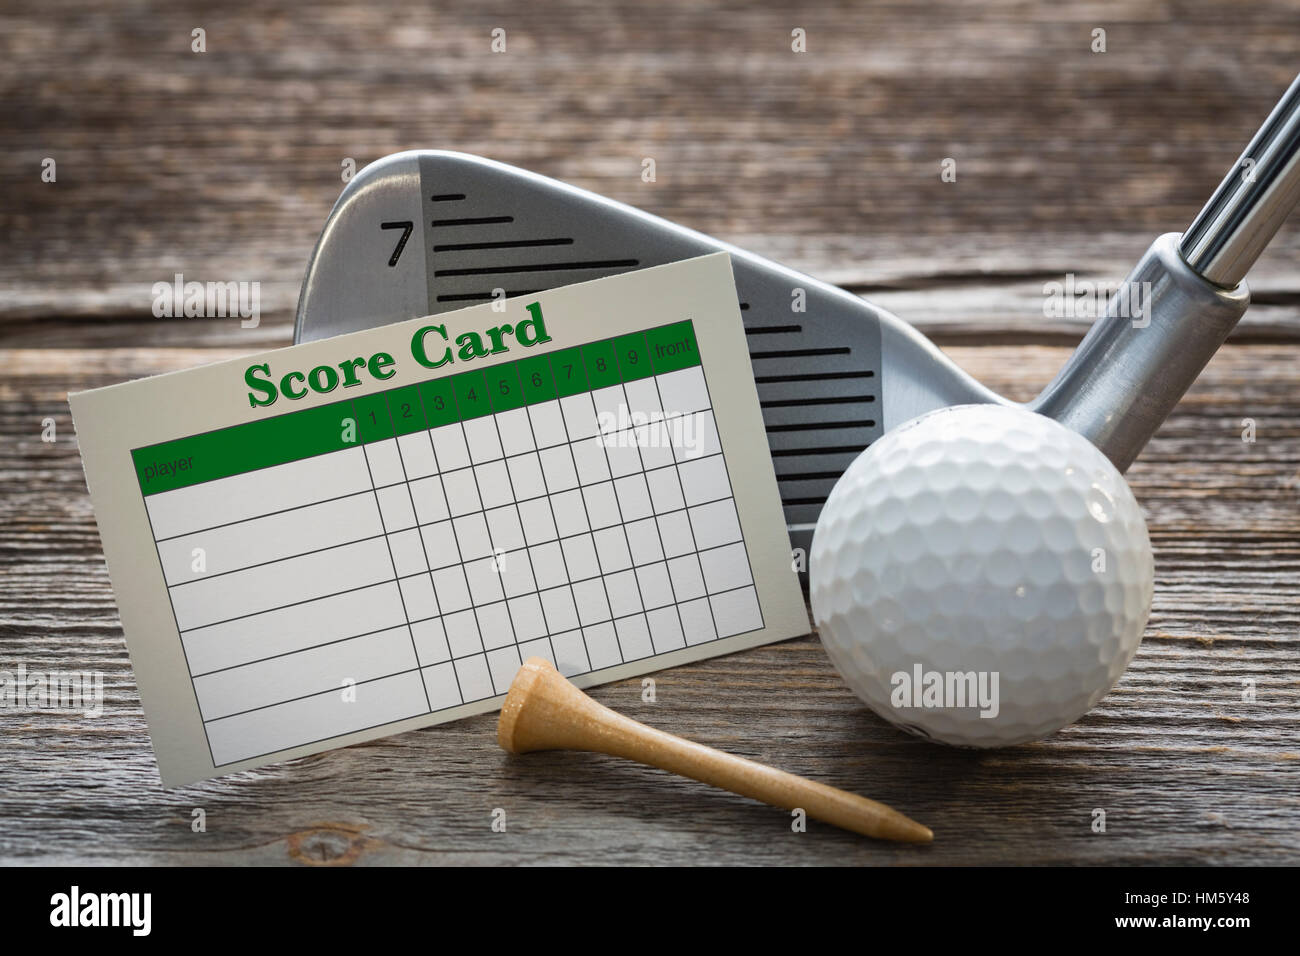 Golf club, ball, tee and score card Stock Photo